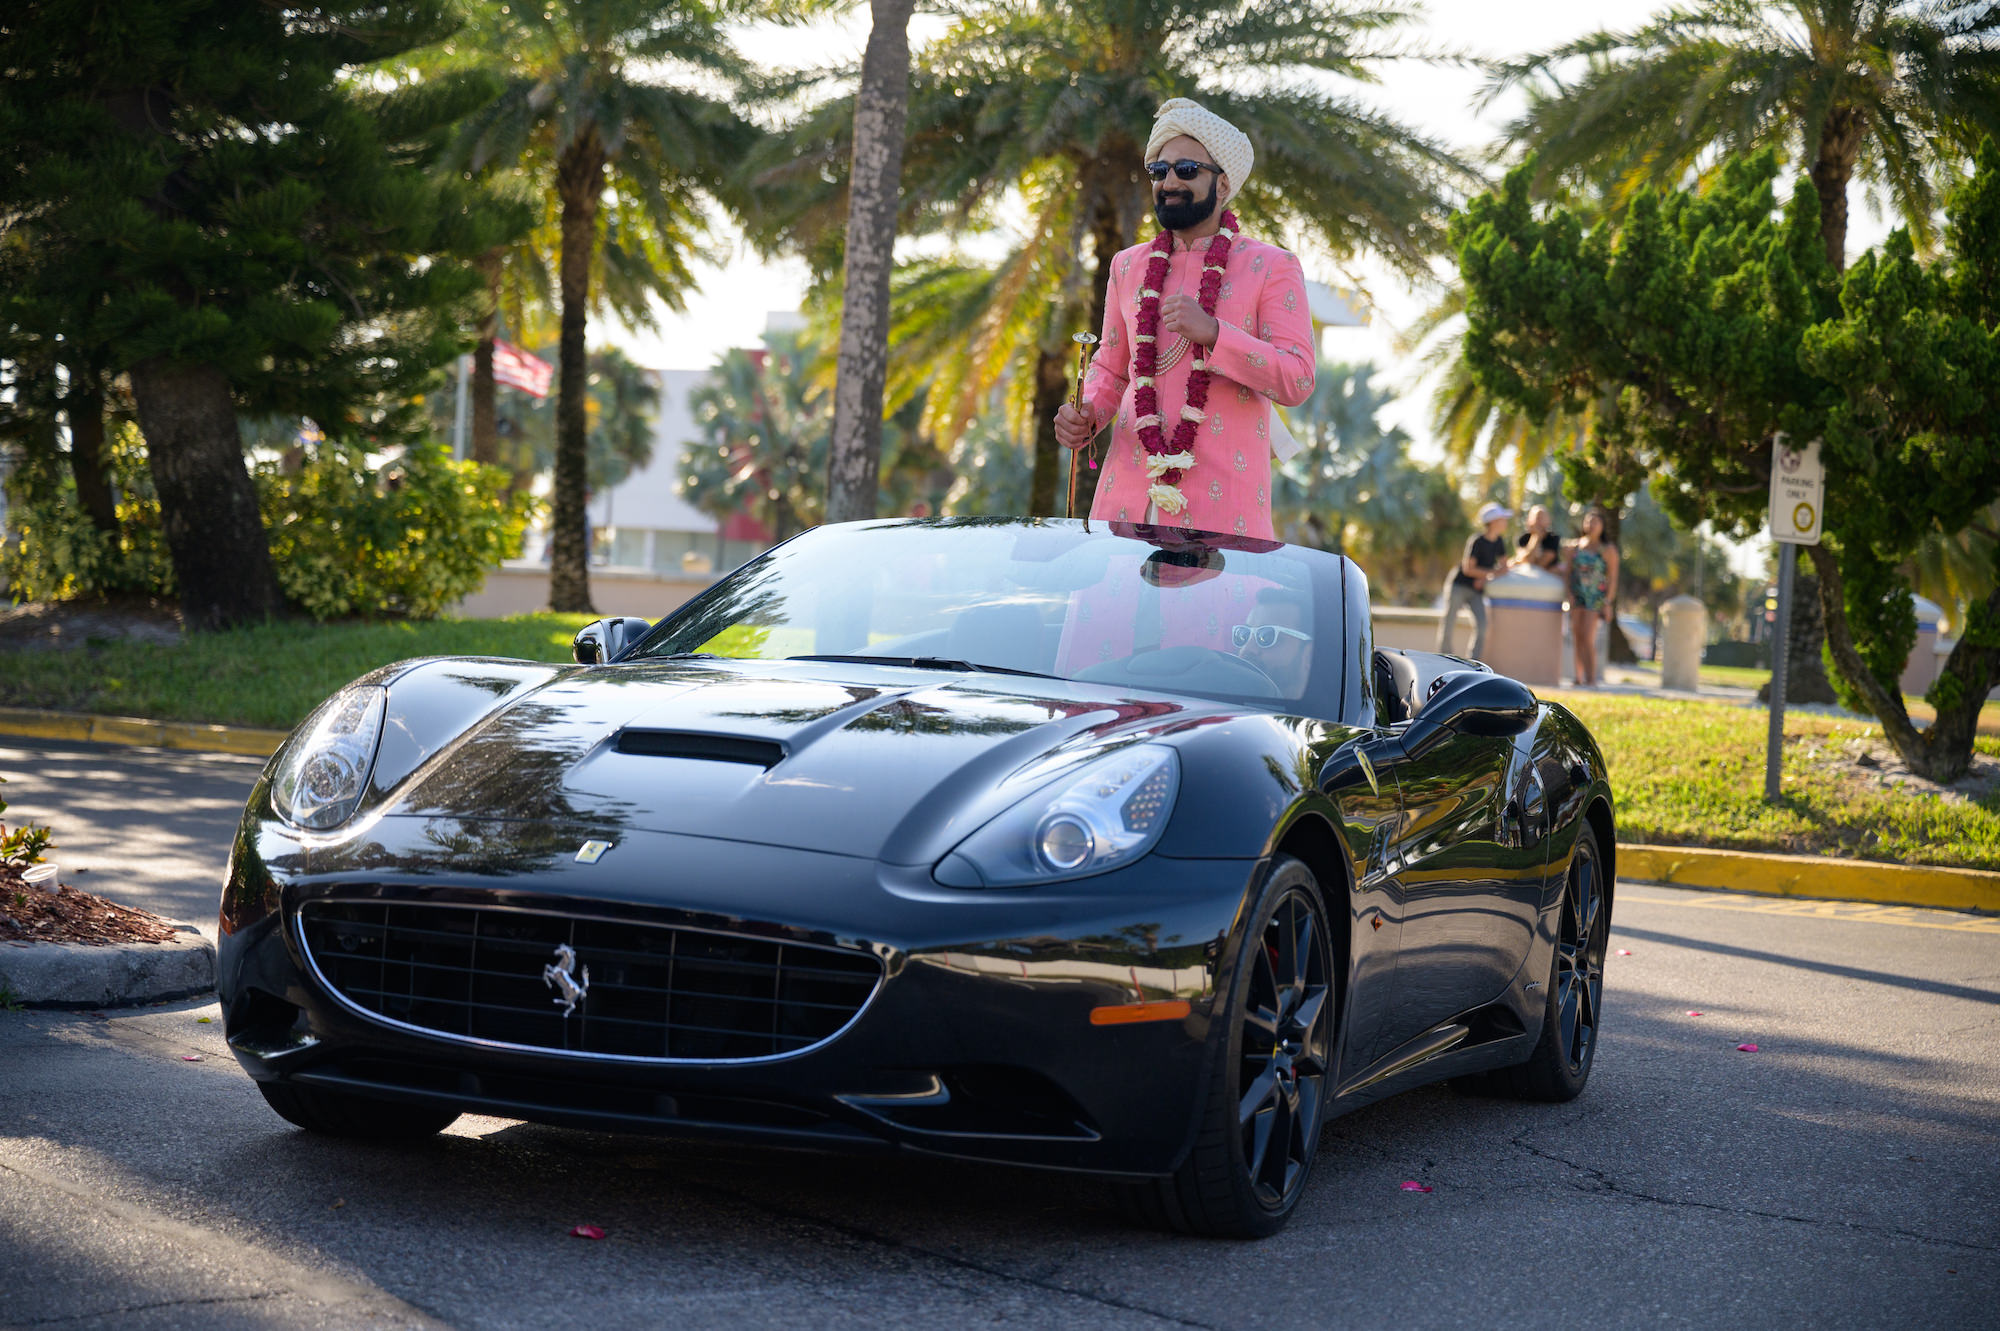 Florida Groom Baraat Arrival in Black Ferrari Convertible Luxury Sports Car, Groom Wearing Traditional Indian Wedding Kurta in Bright Pink and Gold, Red Hindu Garland